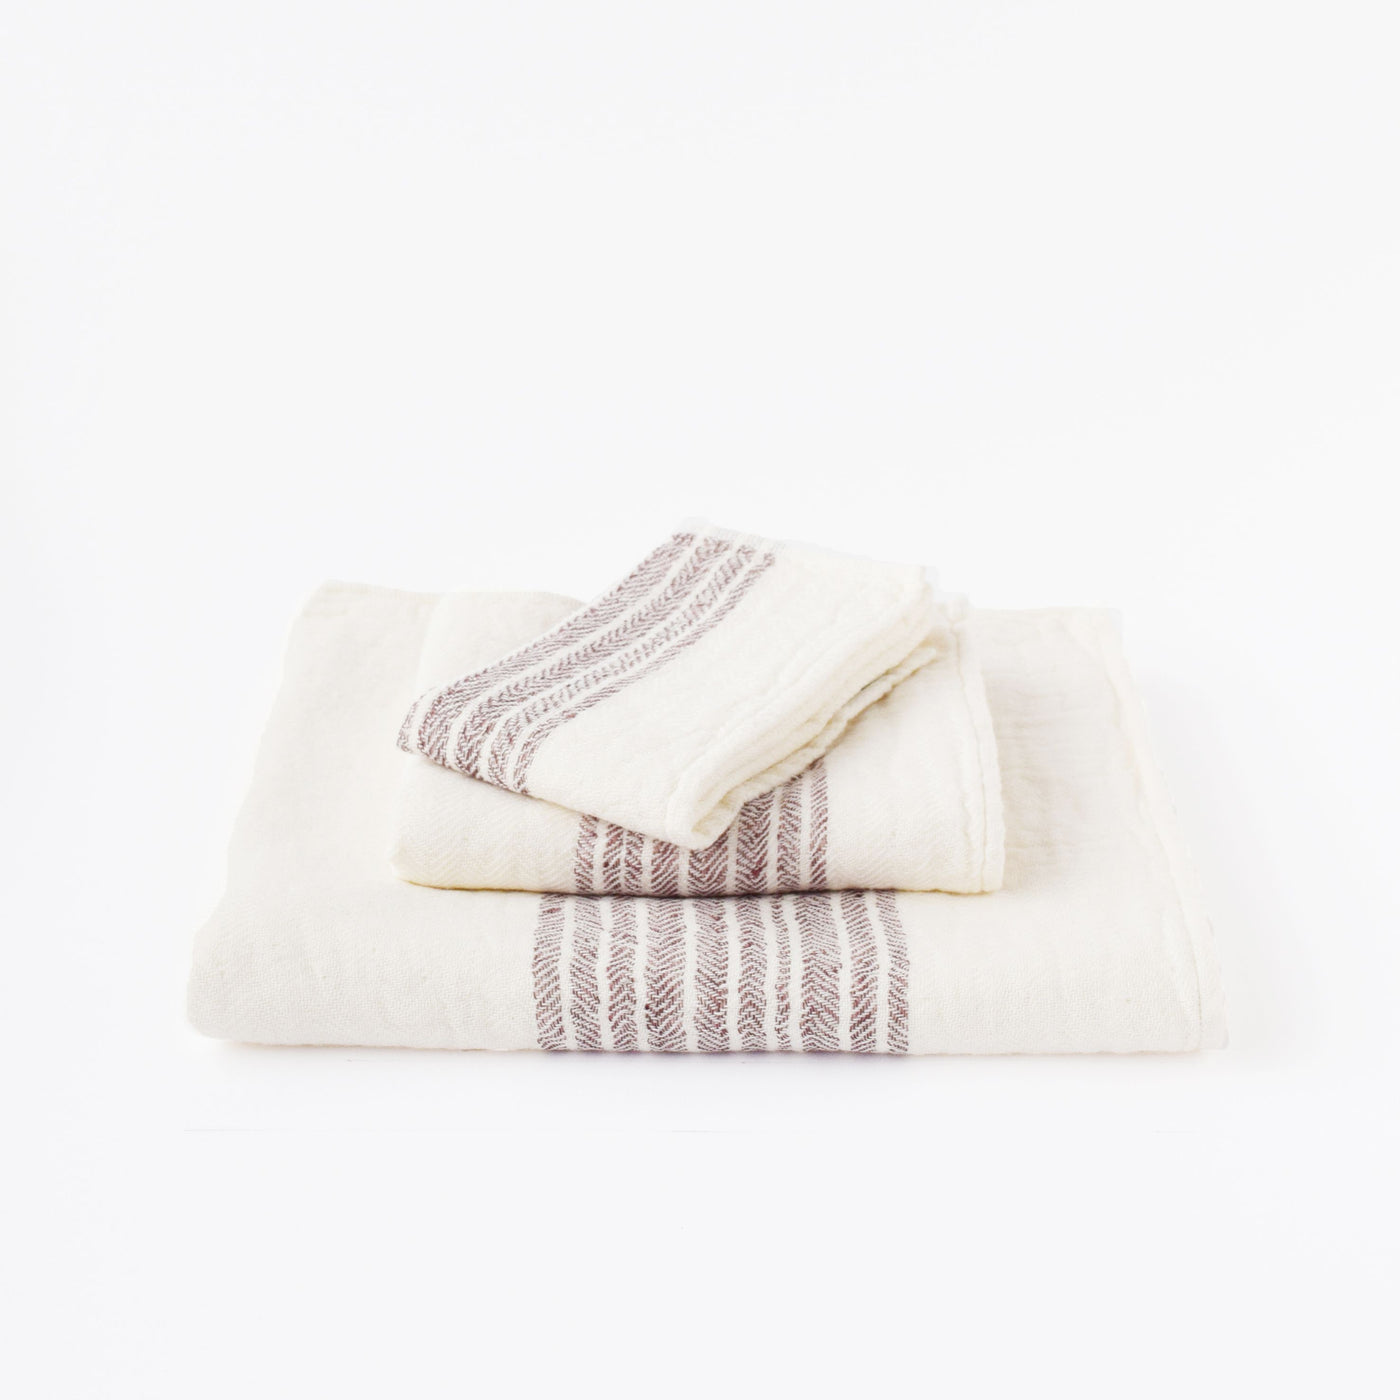 Kontex Flax Line Towels - Burgundy